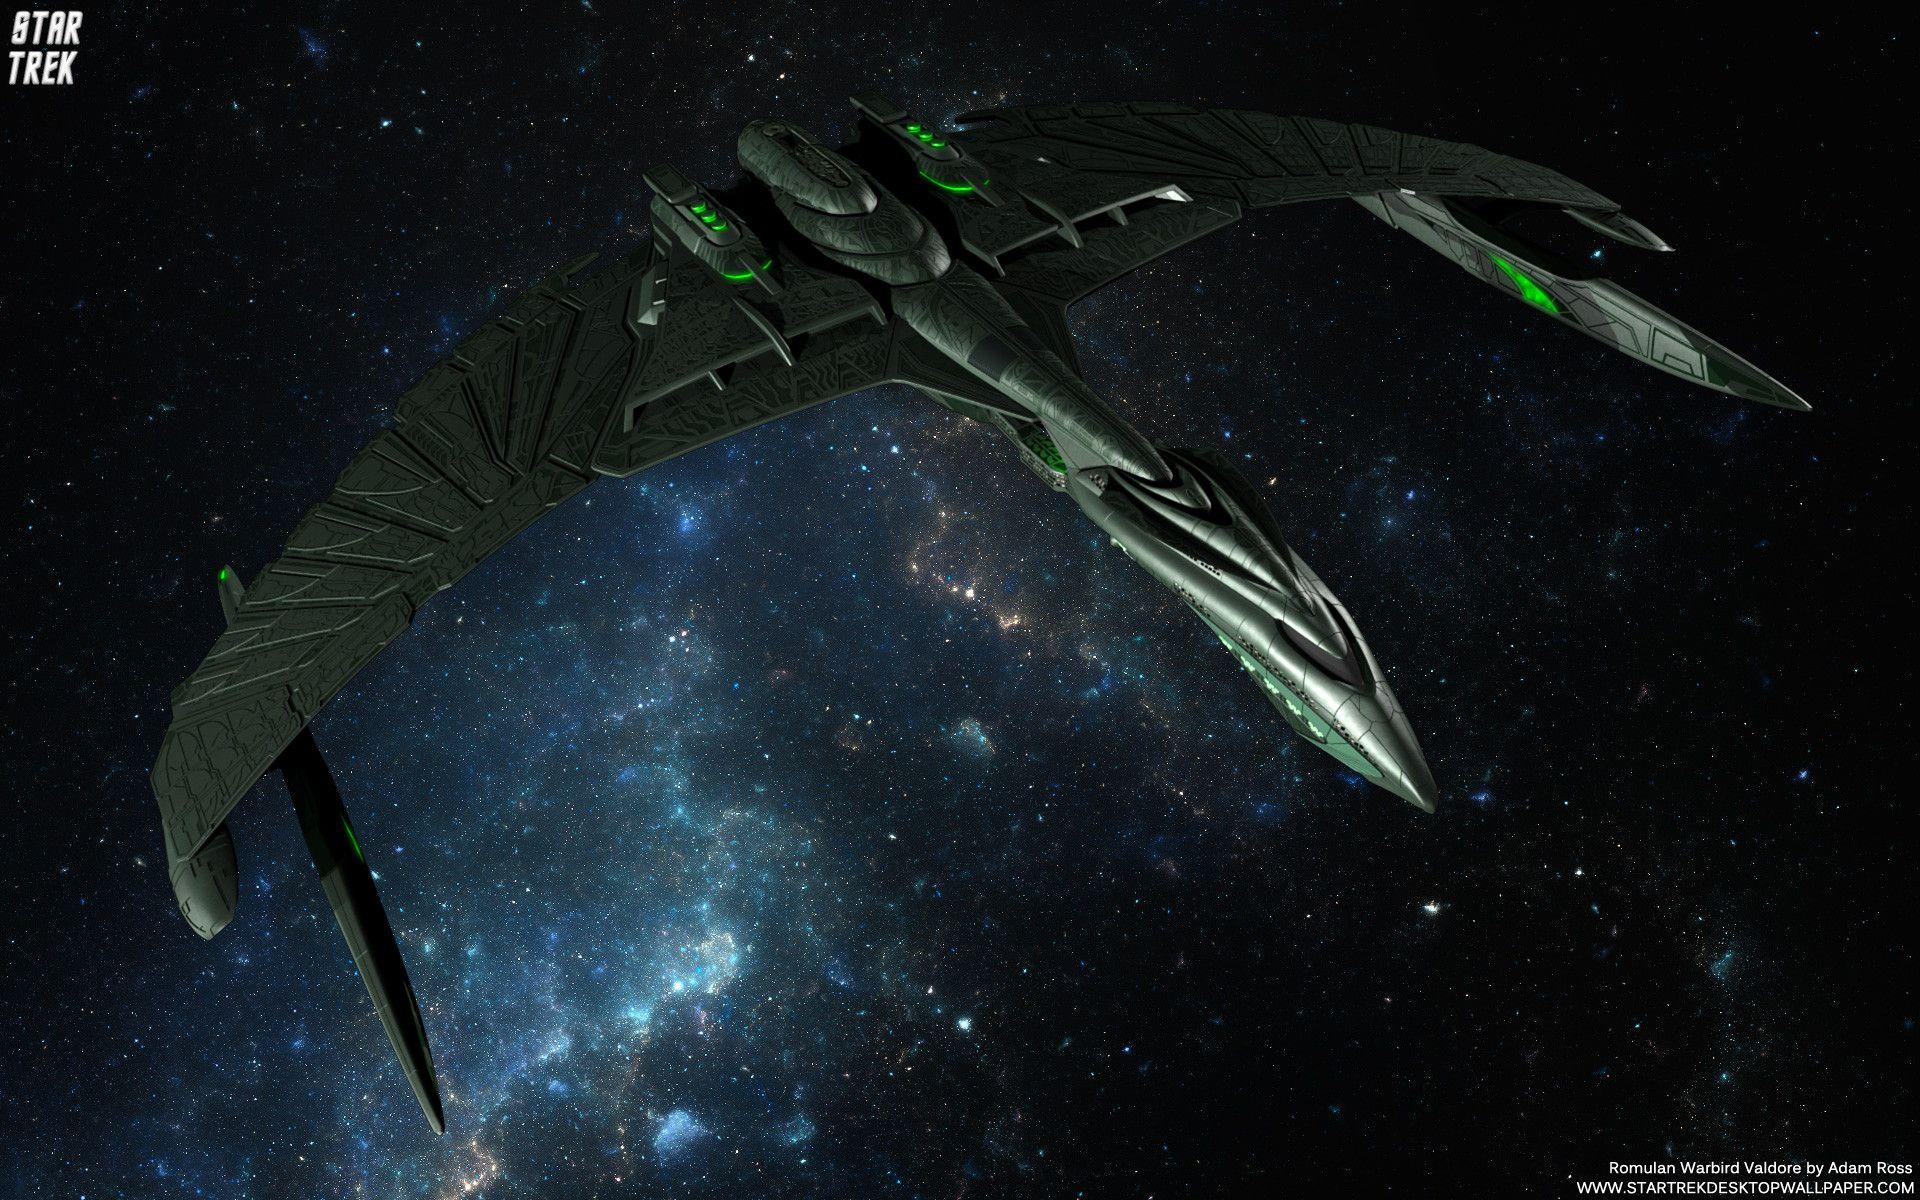 Star Trek Romulan Warbird Valdore, free Star Trek computer desktop